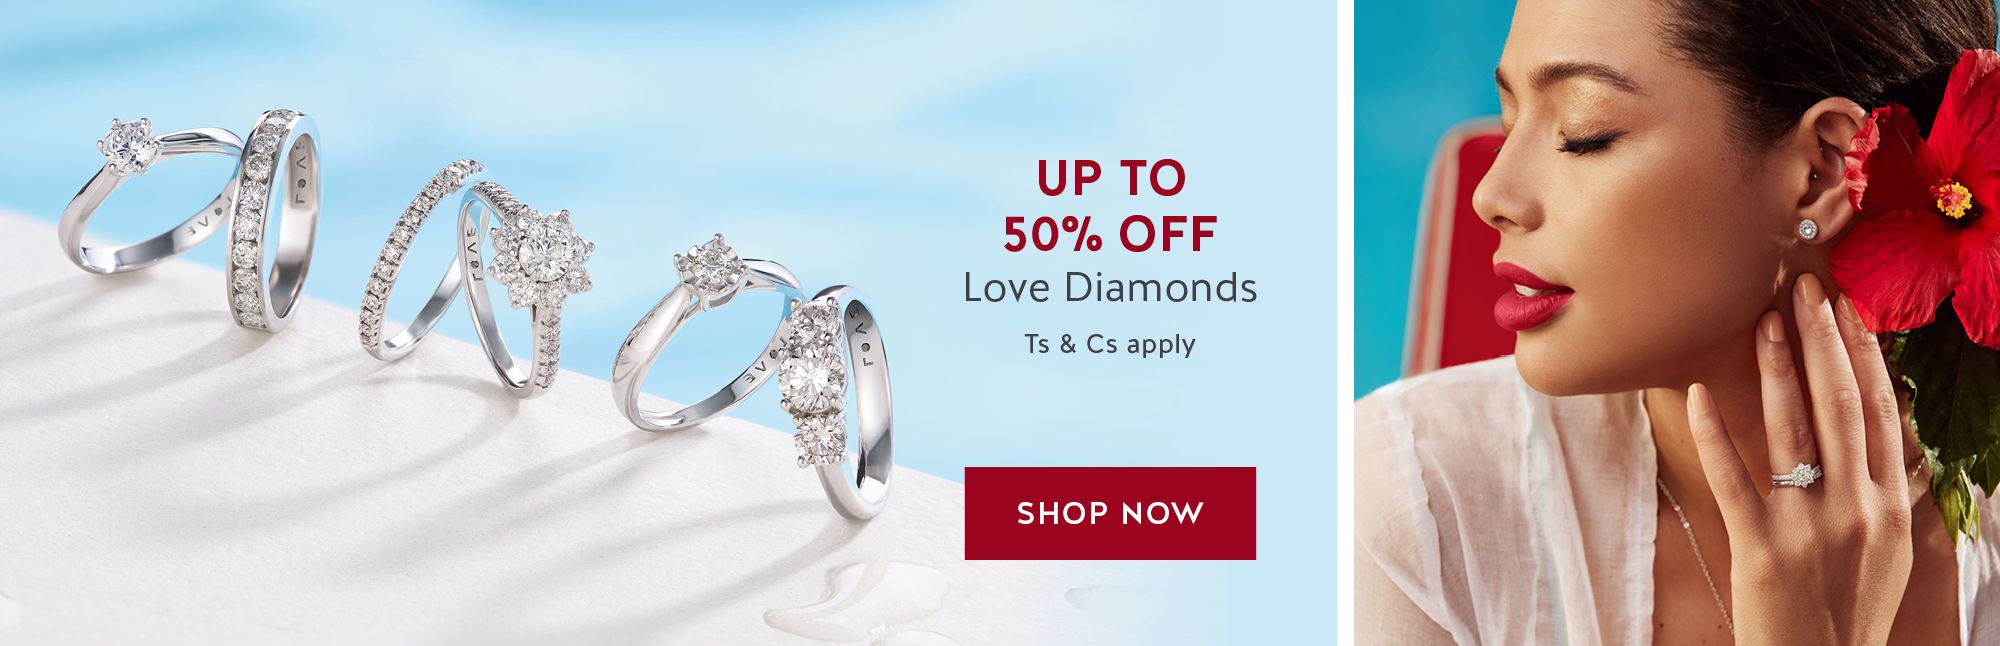 UP TO 50% OFF Love Diamonds